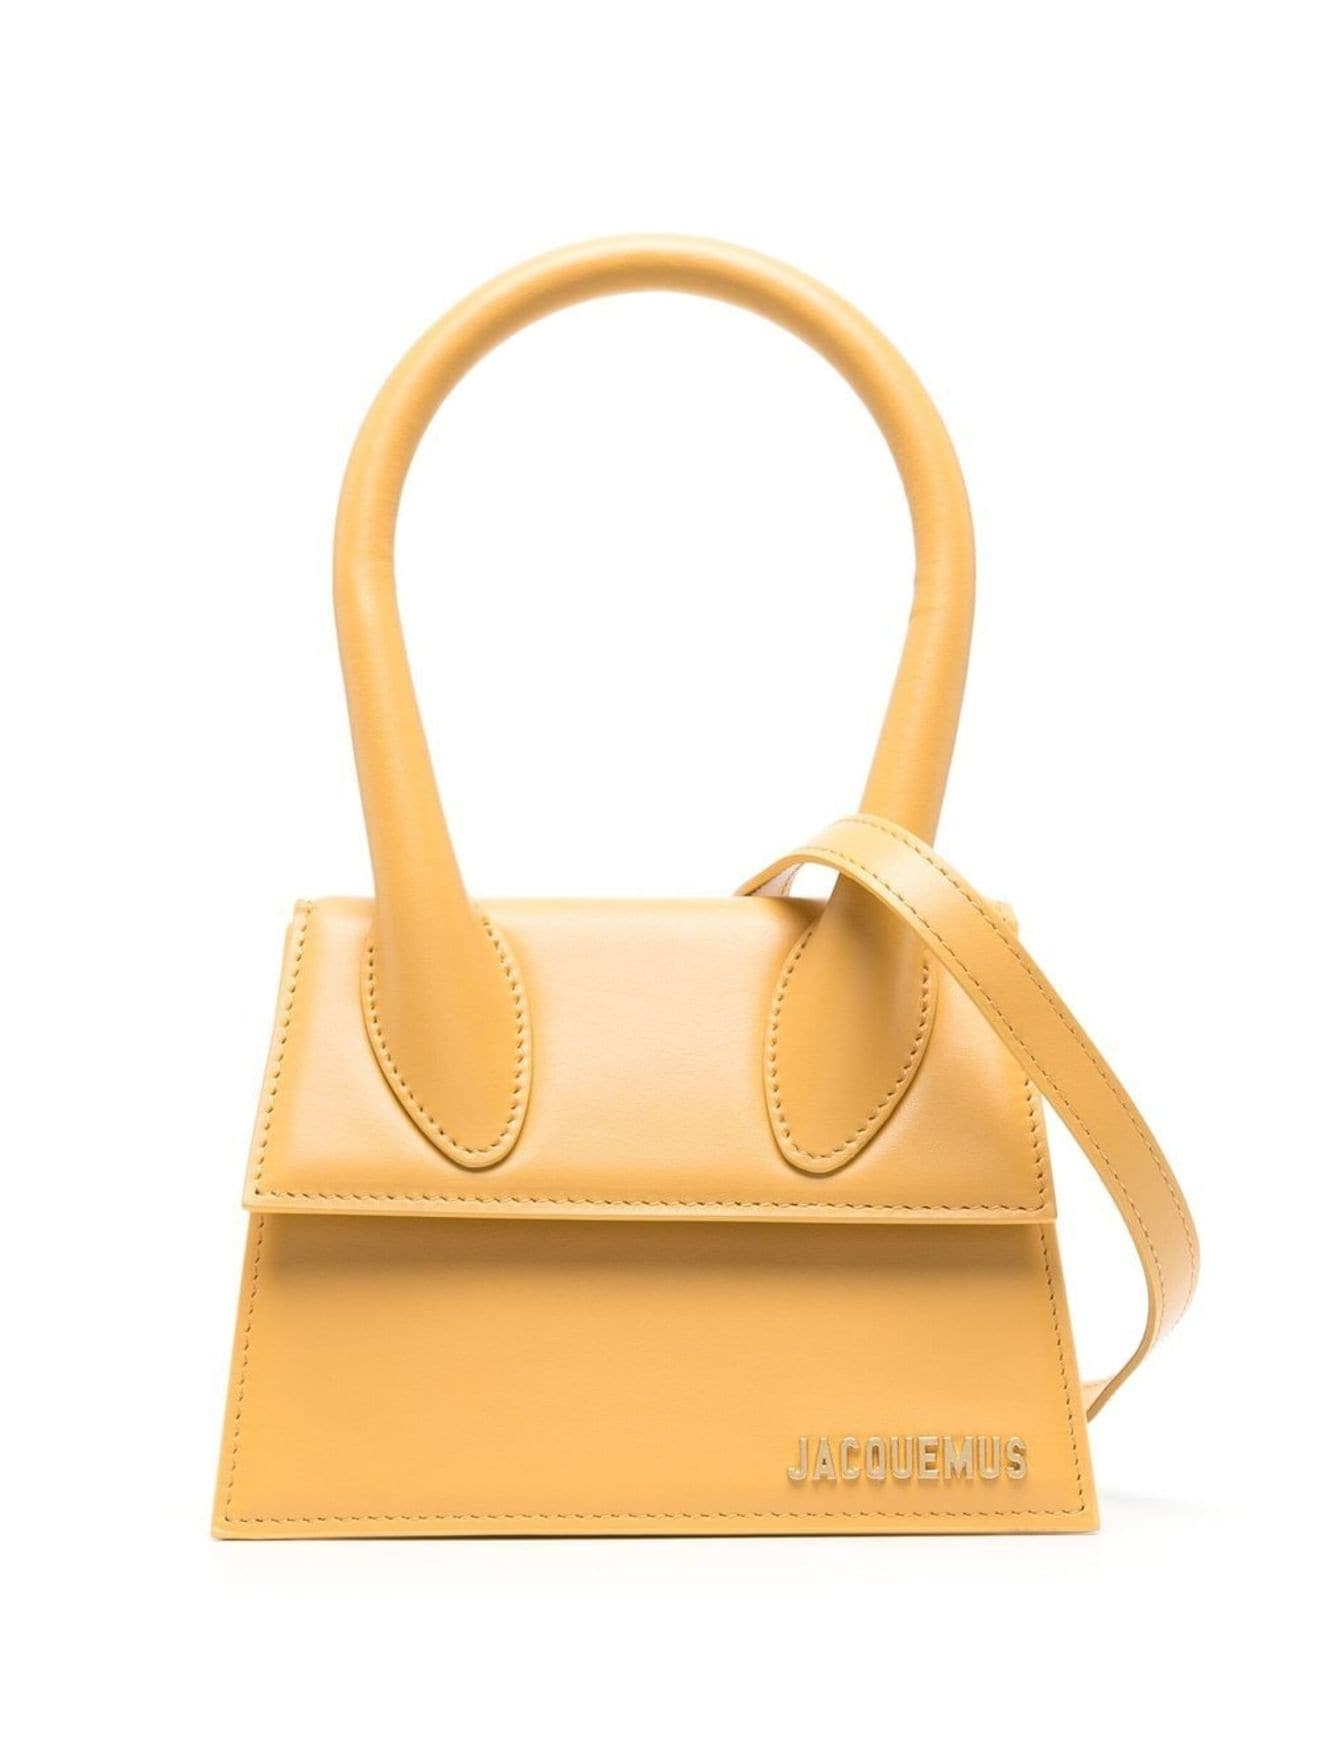 Jacquemus Le Chiquito mini bag yellow | MODES